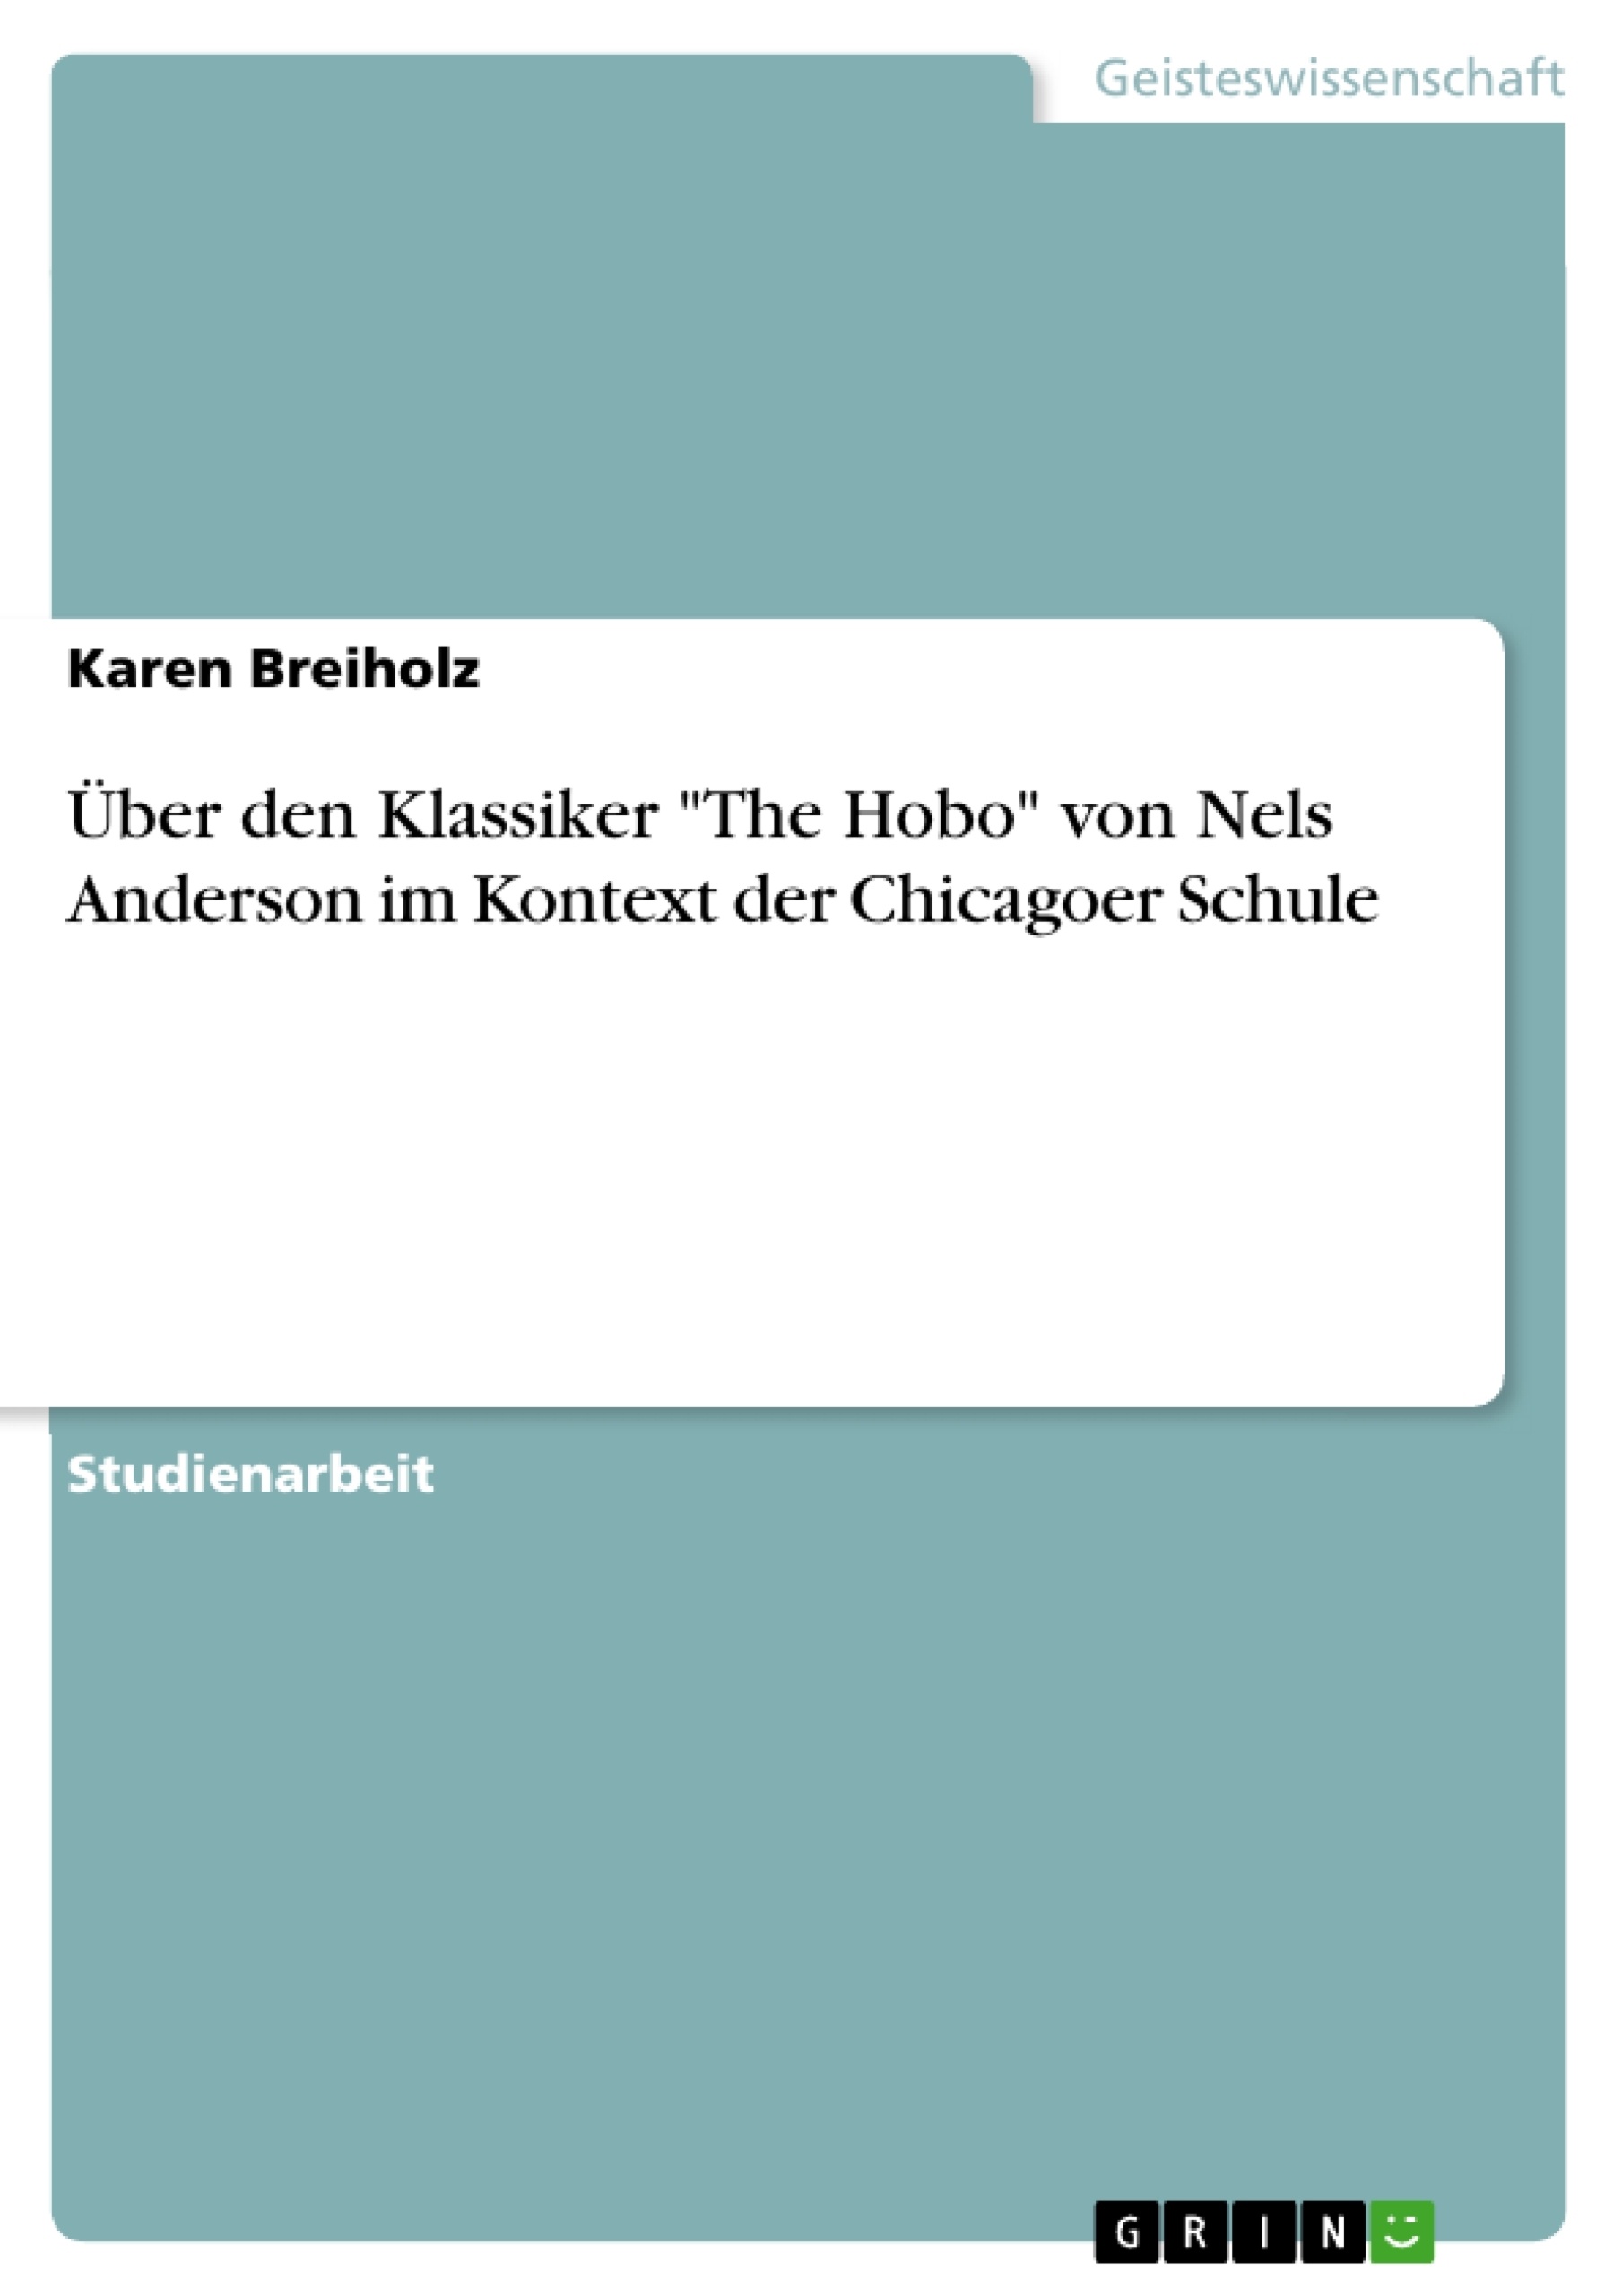 Titre: Über den Klassiker "The Hobo" von Nels Anderson im Kontext der Chicagoer Schule